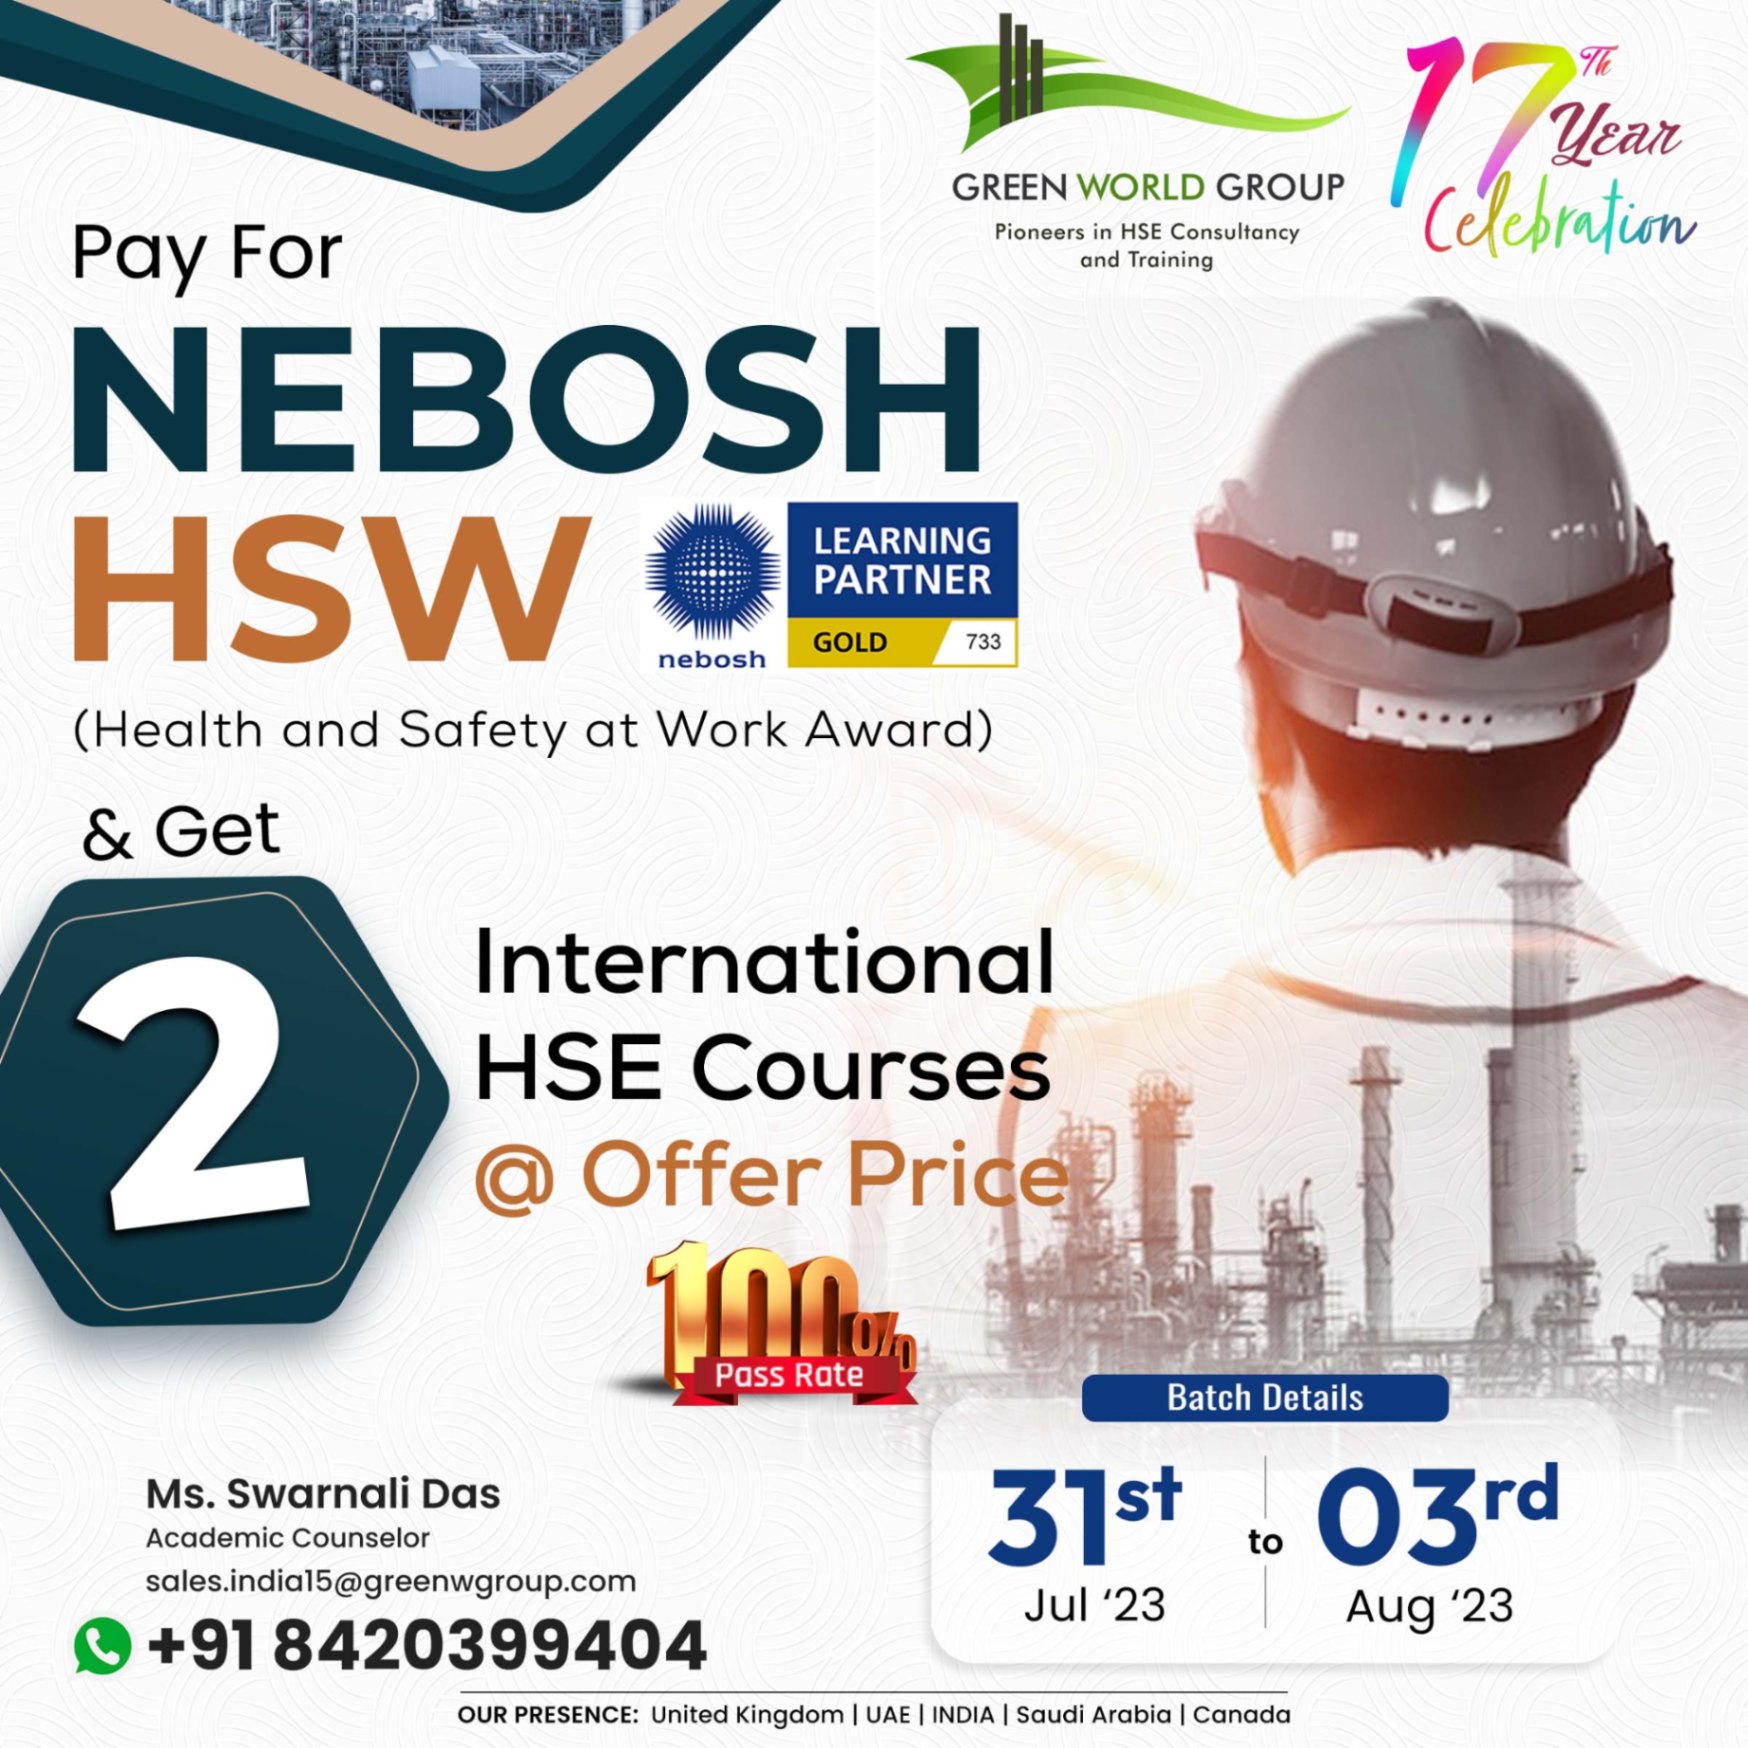 Nebosh HSW in Uttar Pradesh for a Rewarding Career Path